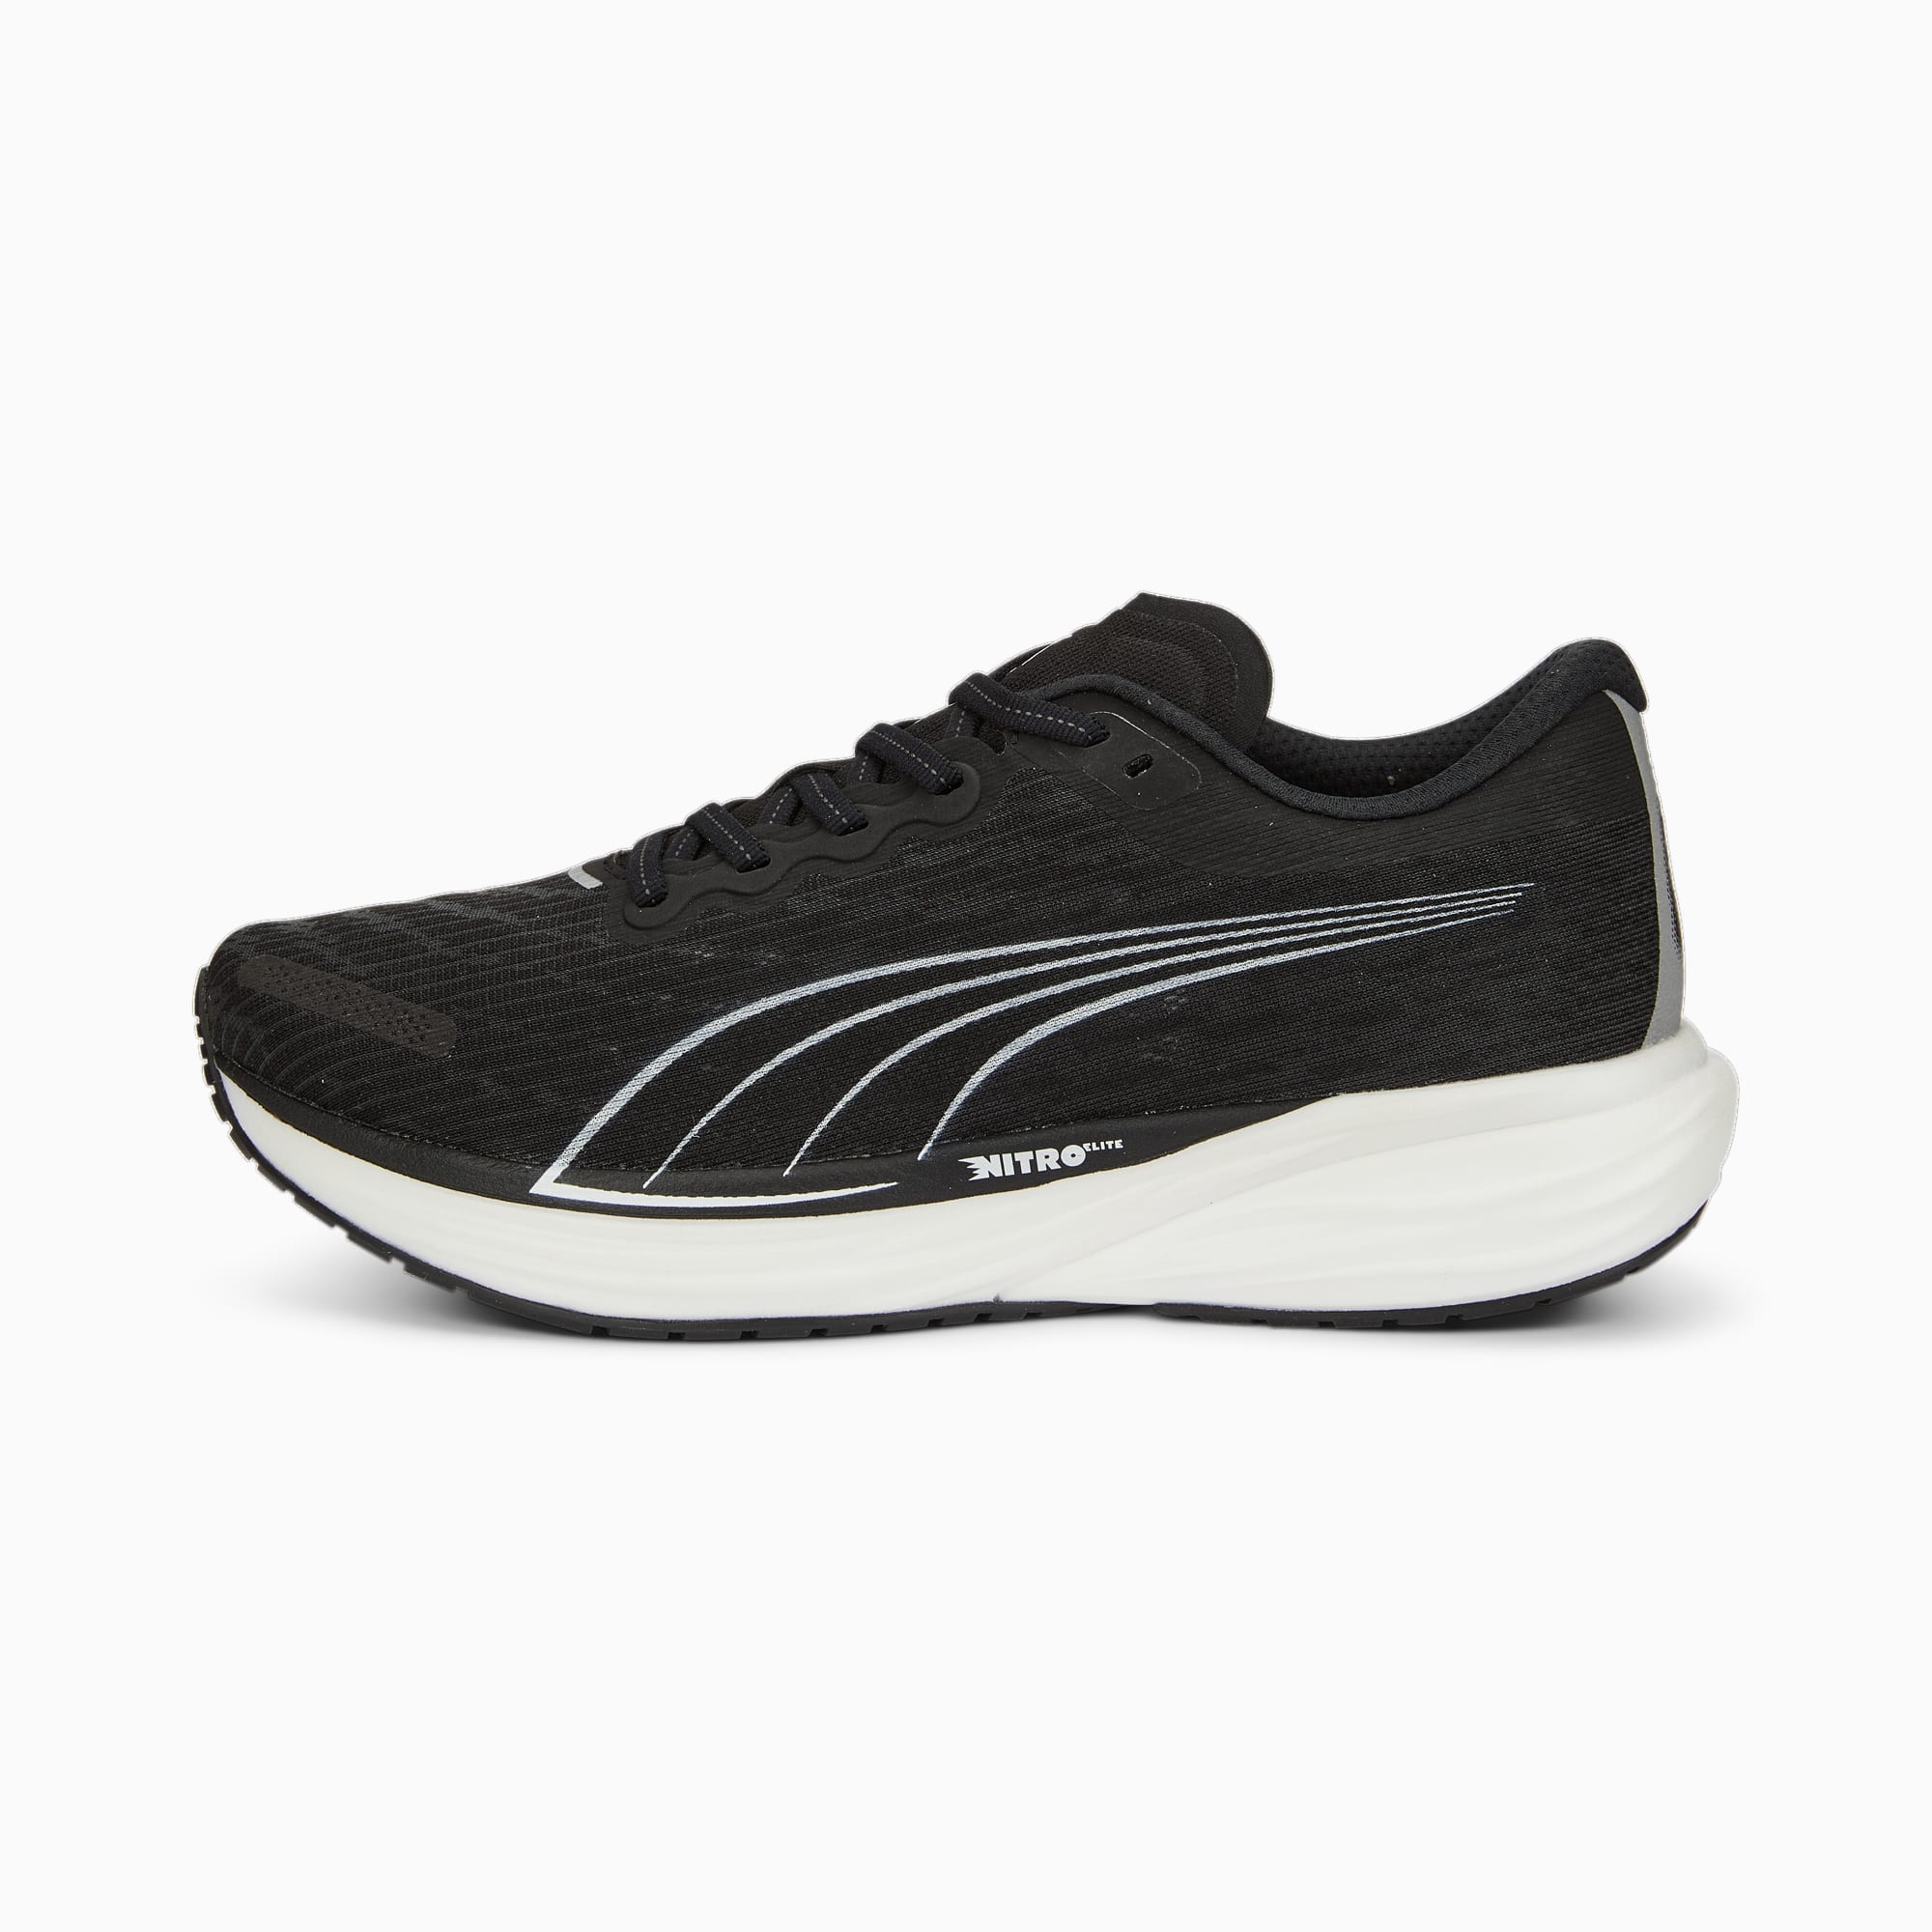 Deviate NITRO 2 Men's Running Shoes | Puma Black | PUMA Shop All Puma ...